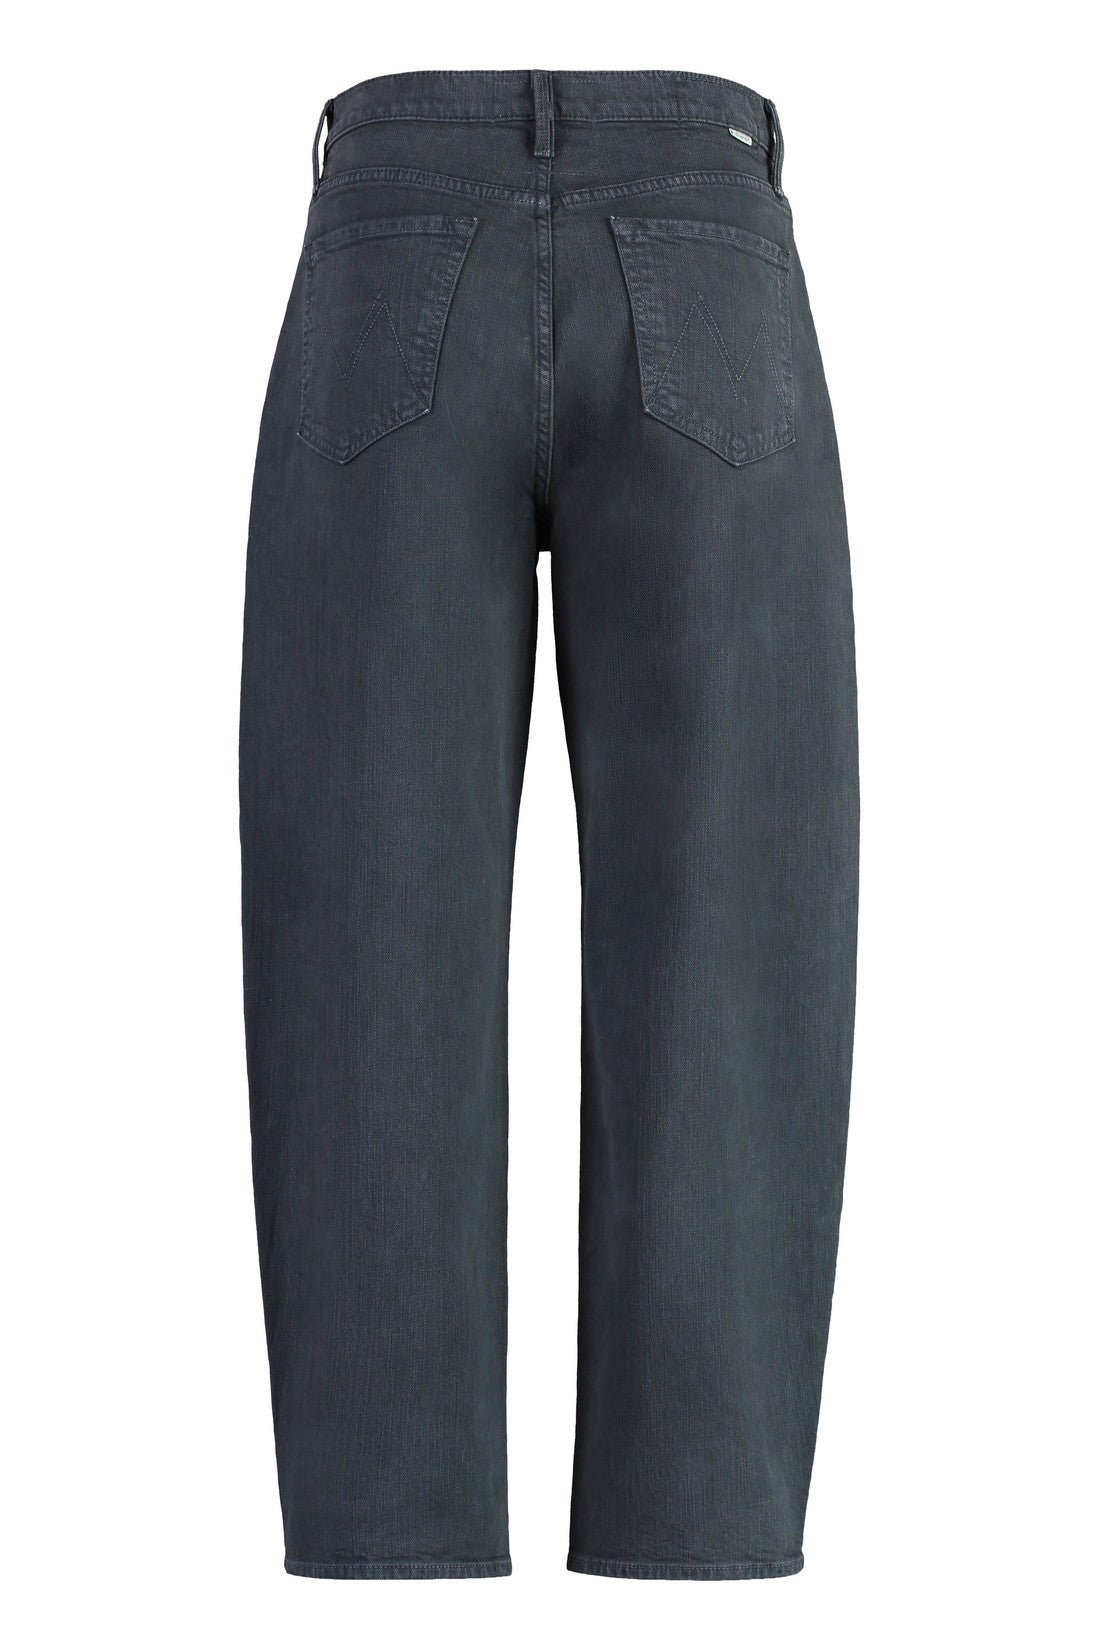 Mother-OUTLET-SALE-The Curbside Ankle 5-pocket jeans-ARCHIVIST